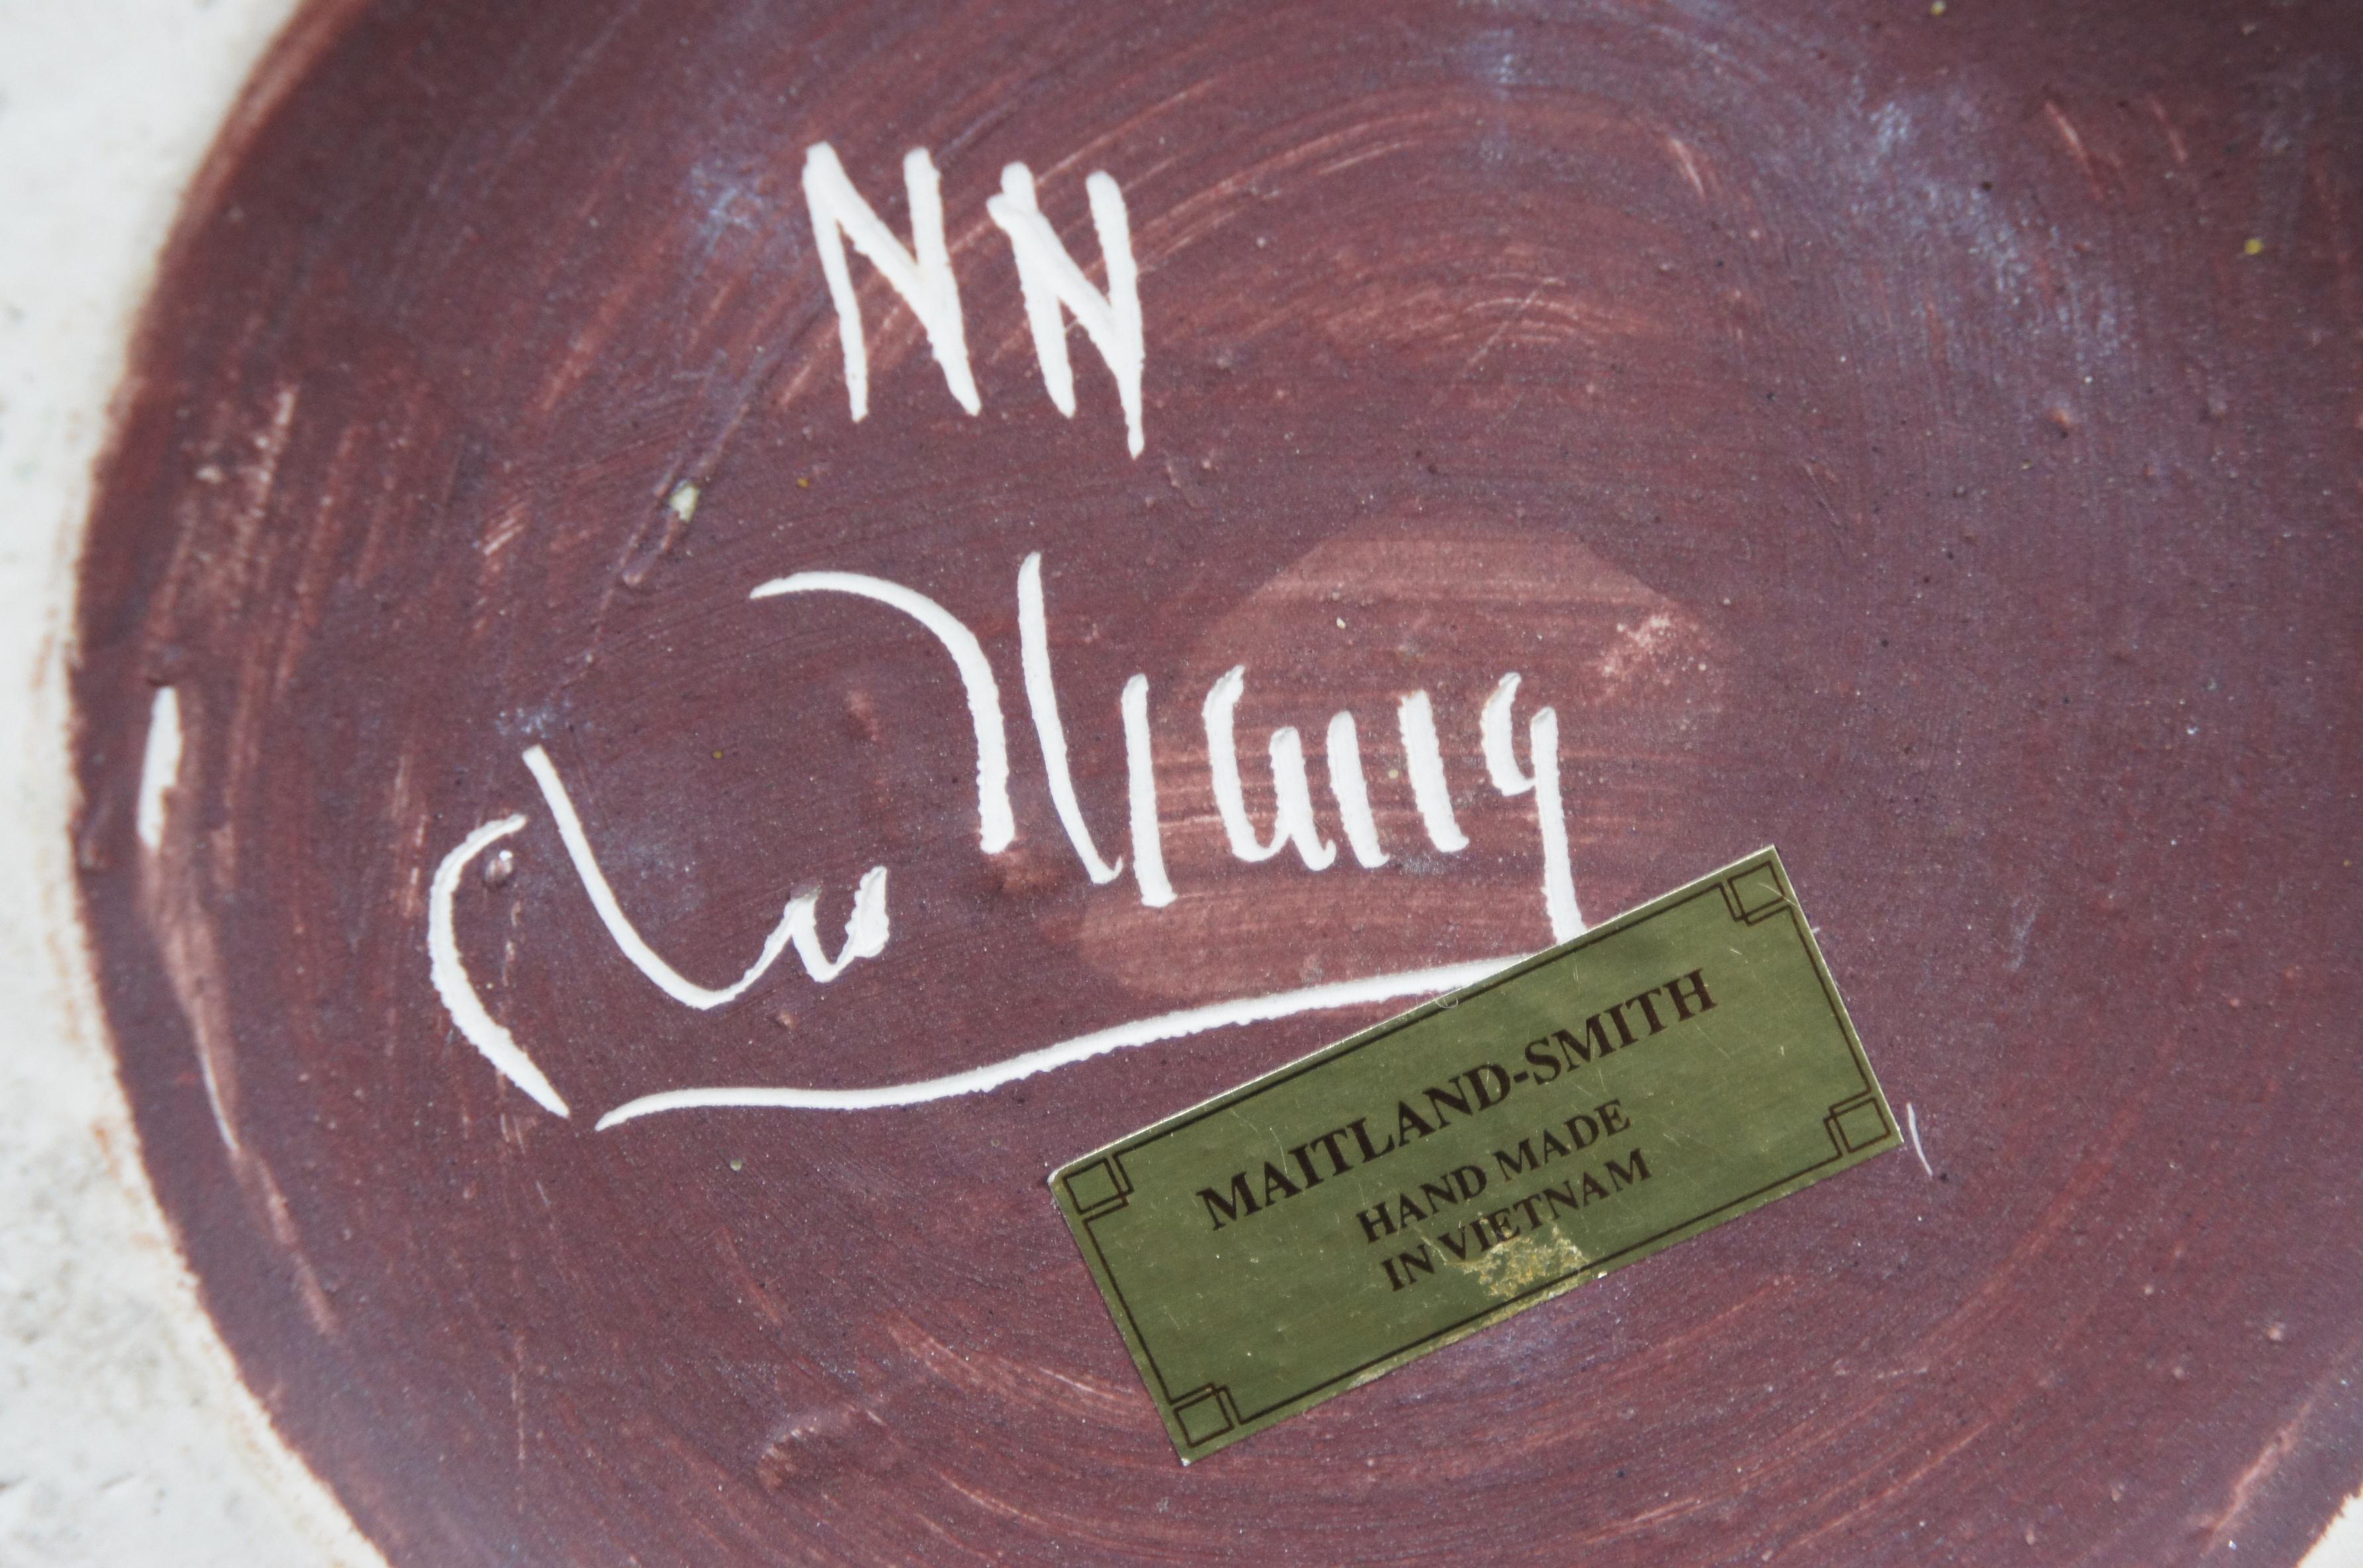 20th Century Maitland Smith Ceramic Lizard Handled Mantel Floor Vase Urn Celedon Teal Green